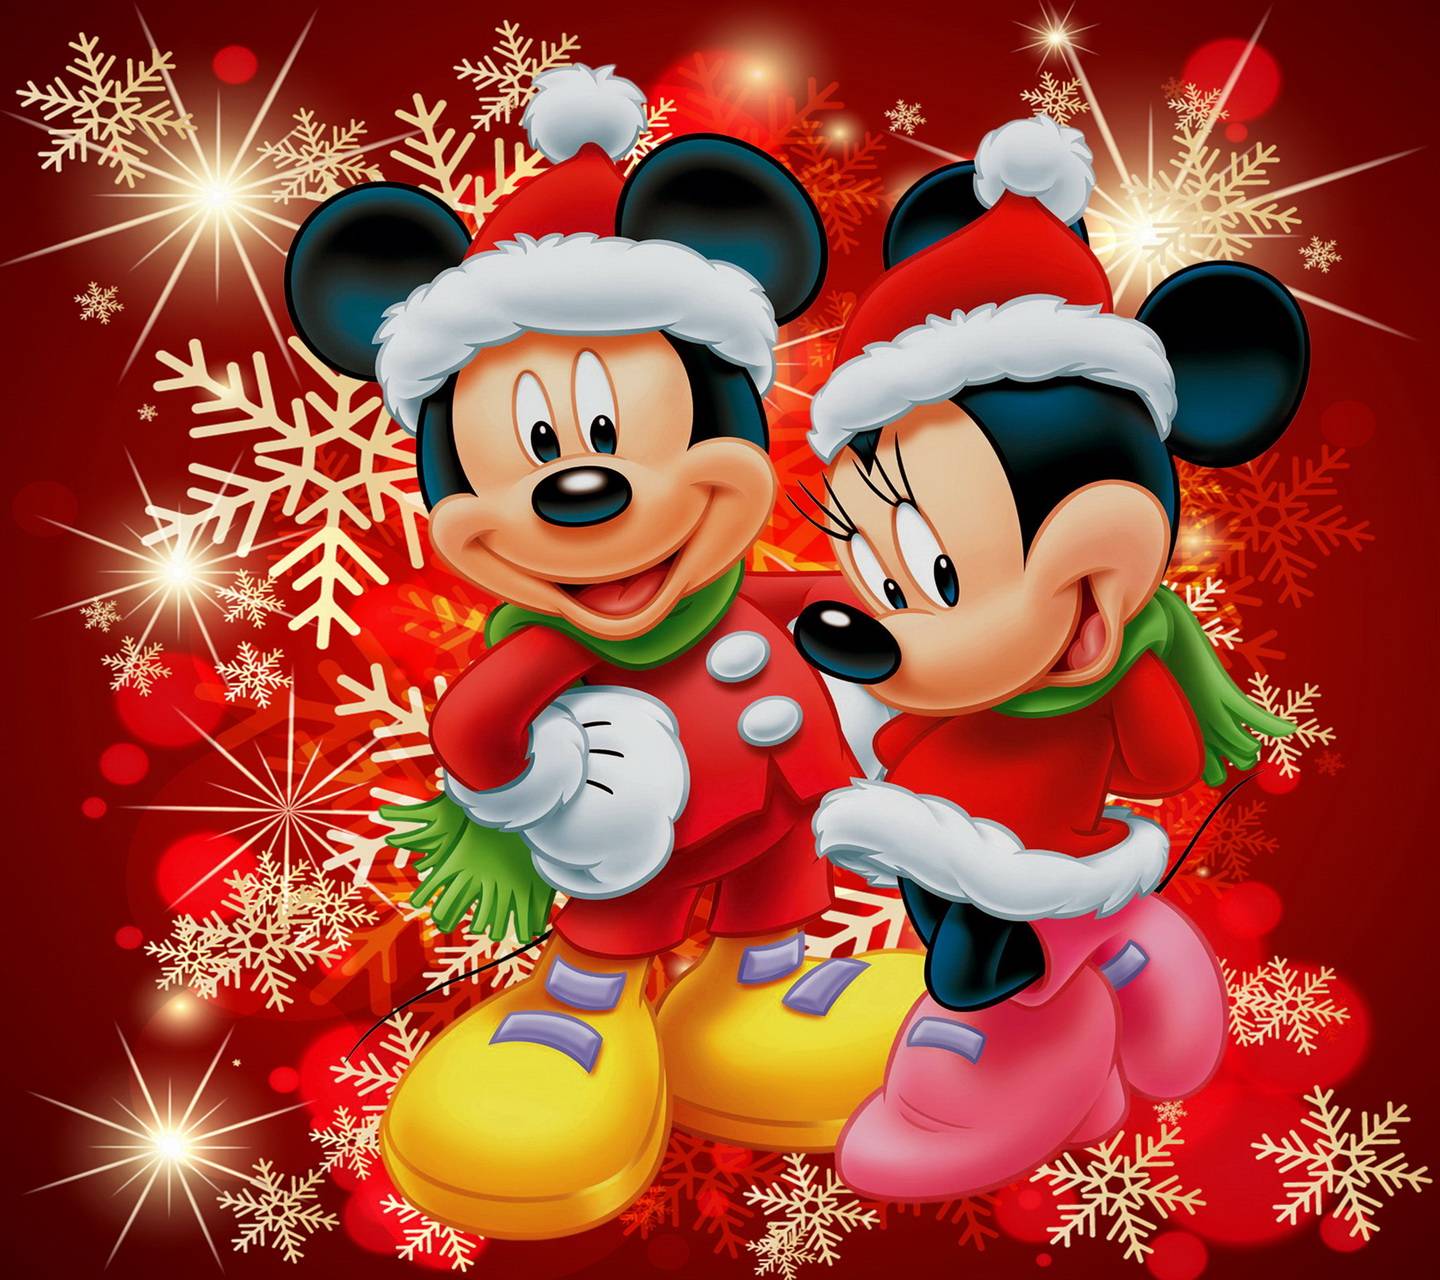 Disney Christmas wallpaper